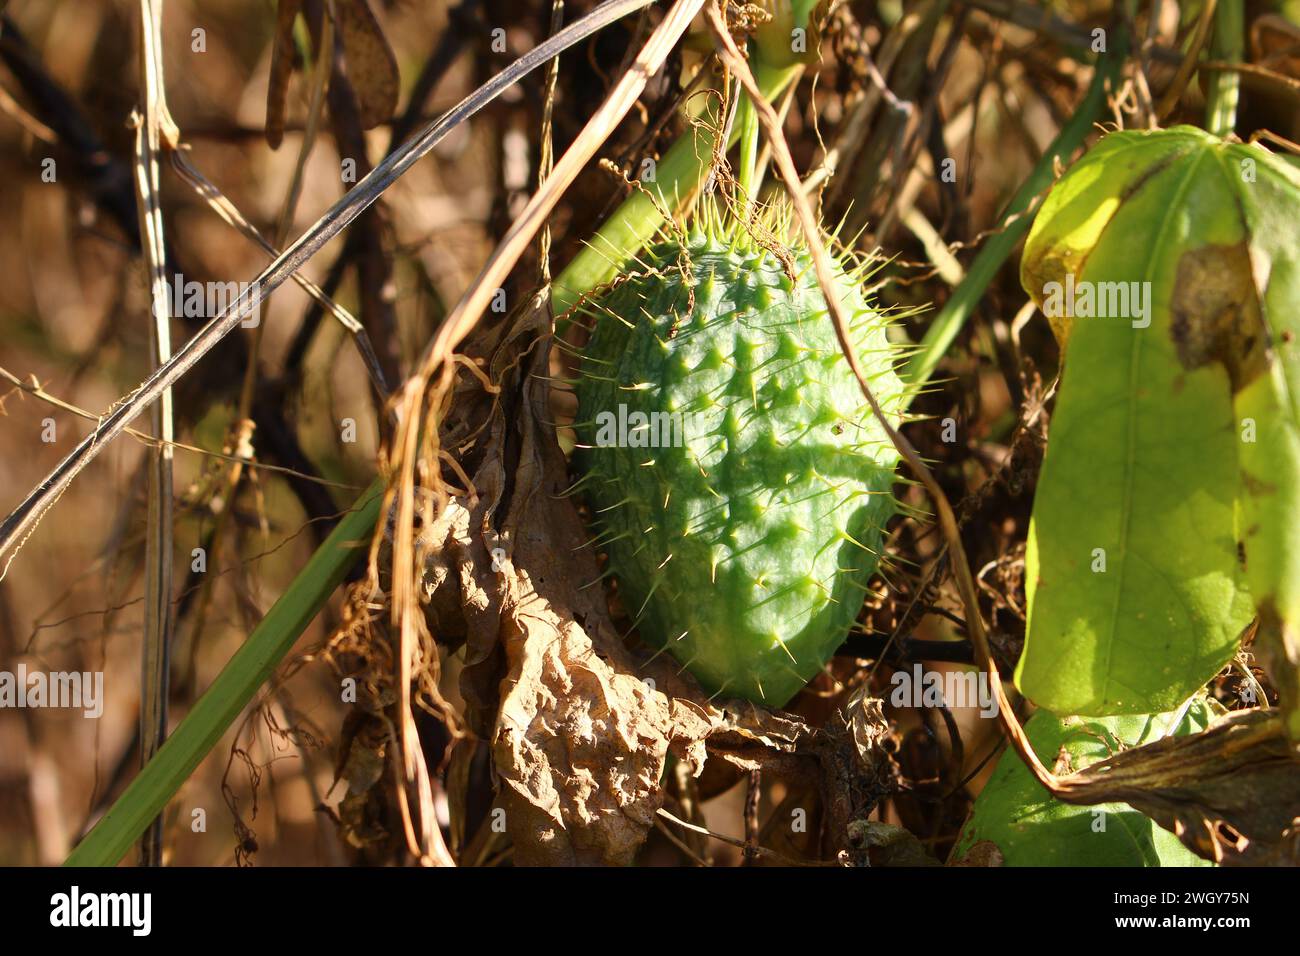 The spiny green fruits of the wild plant Echinocystis lobata Stock Photo